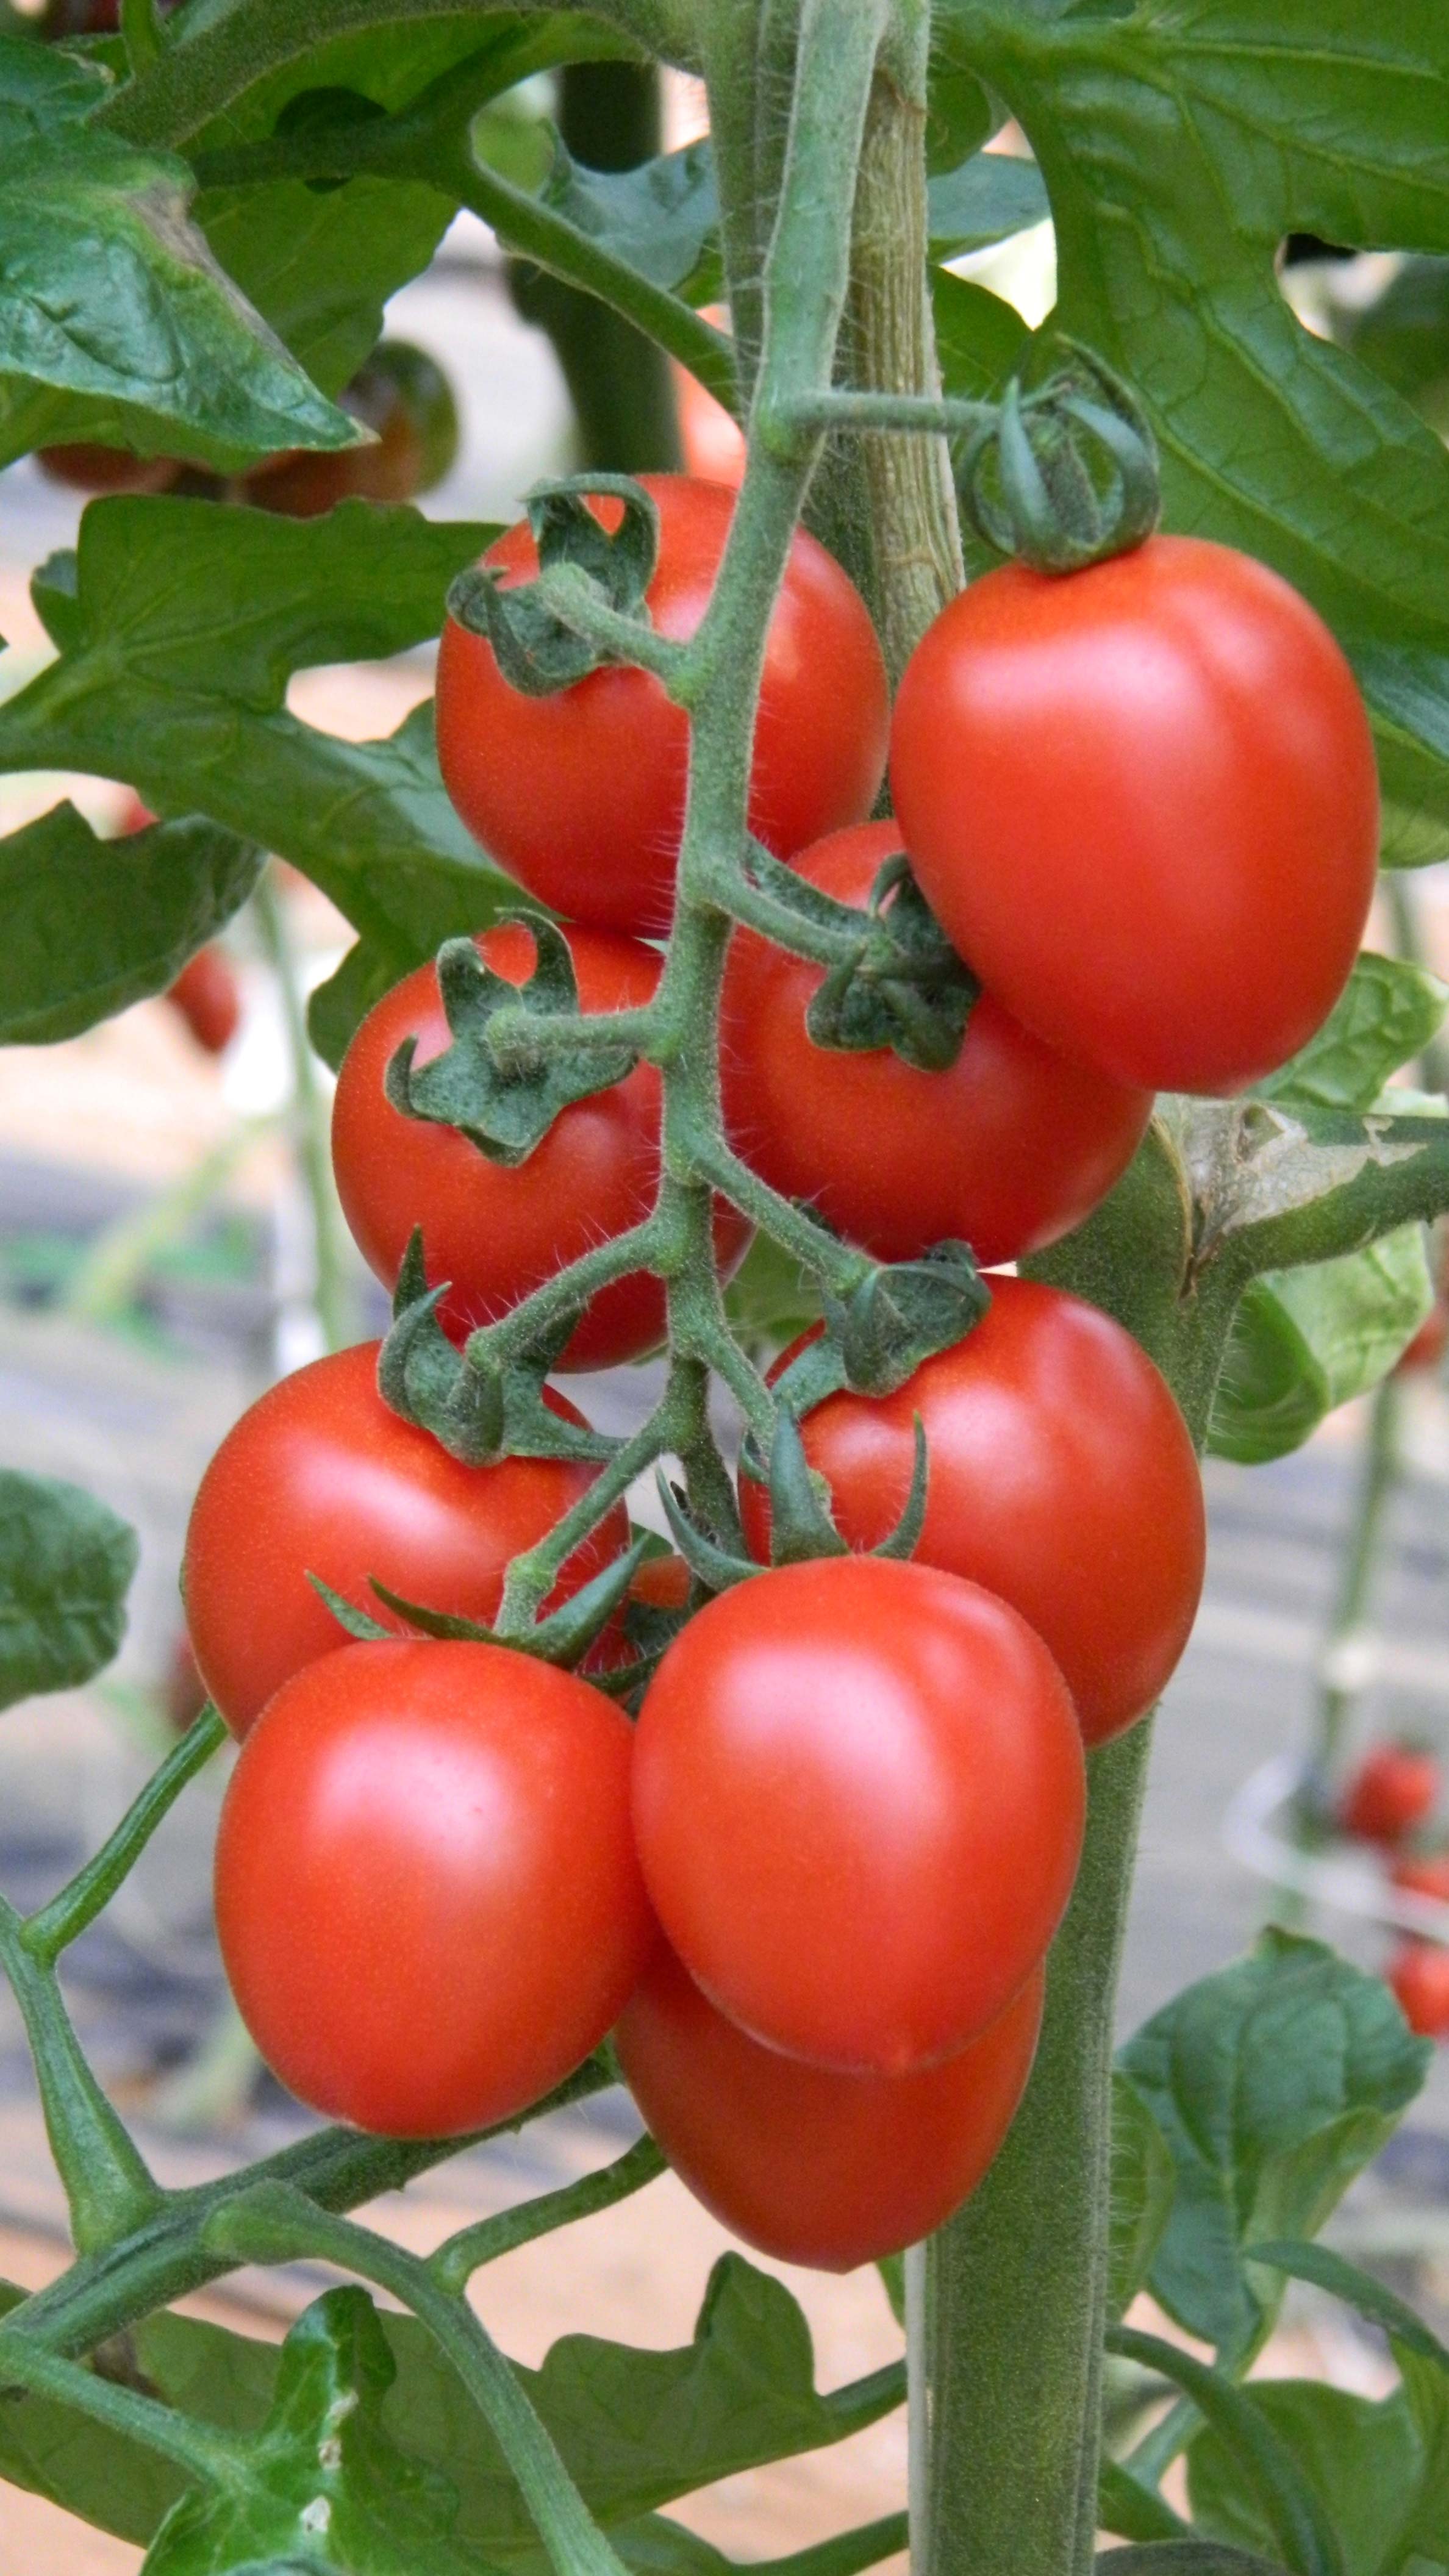 KWS acquires tomato breeding company